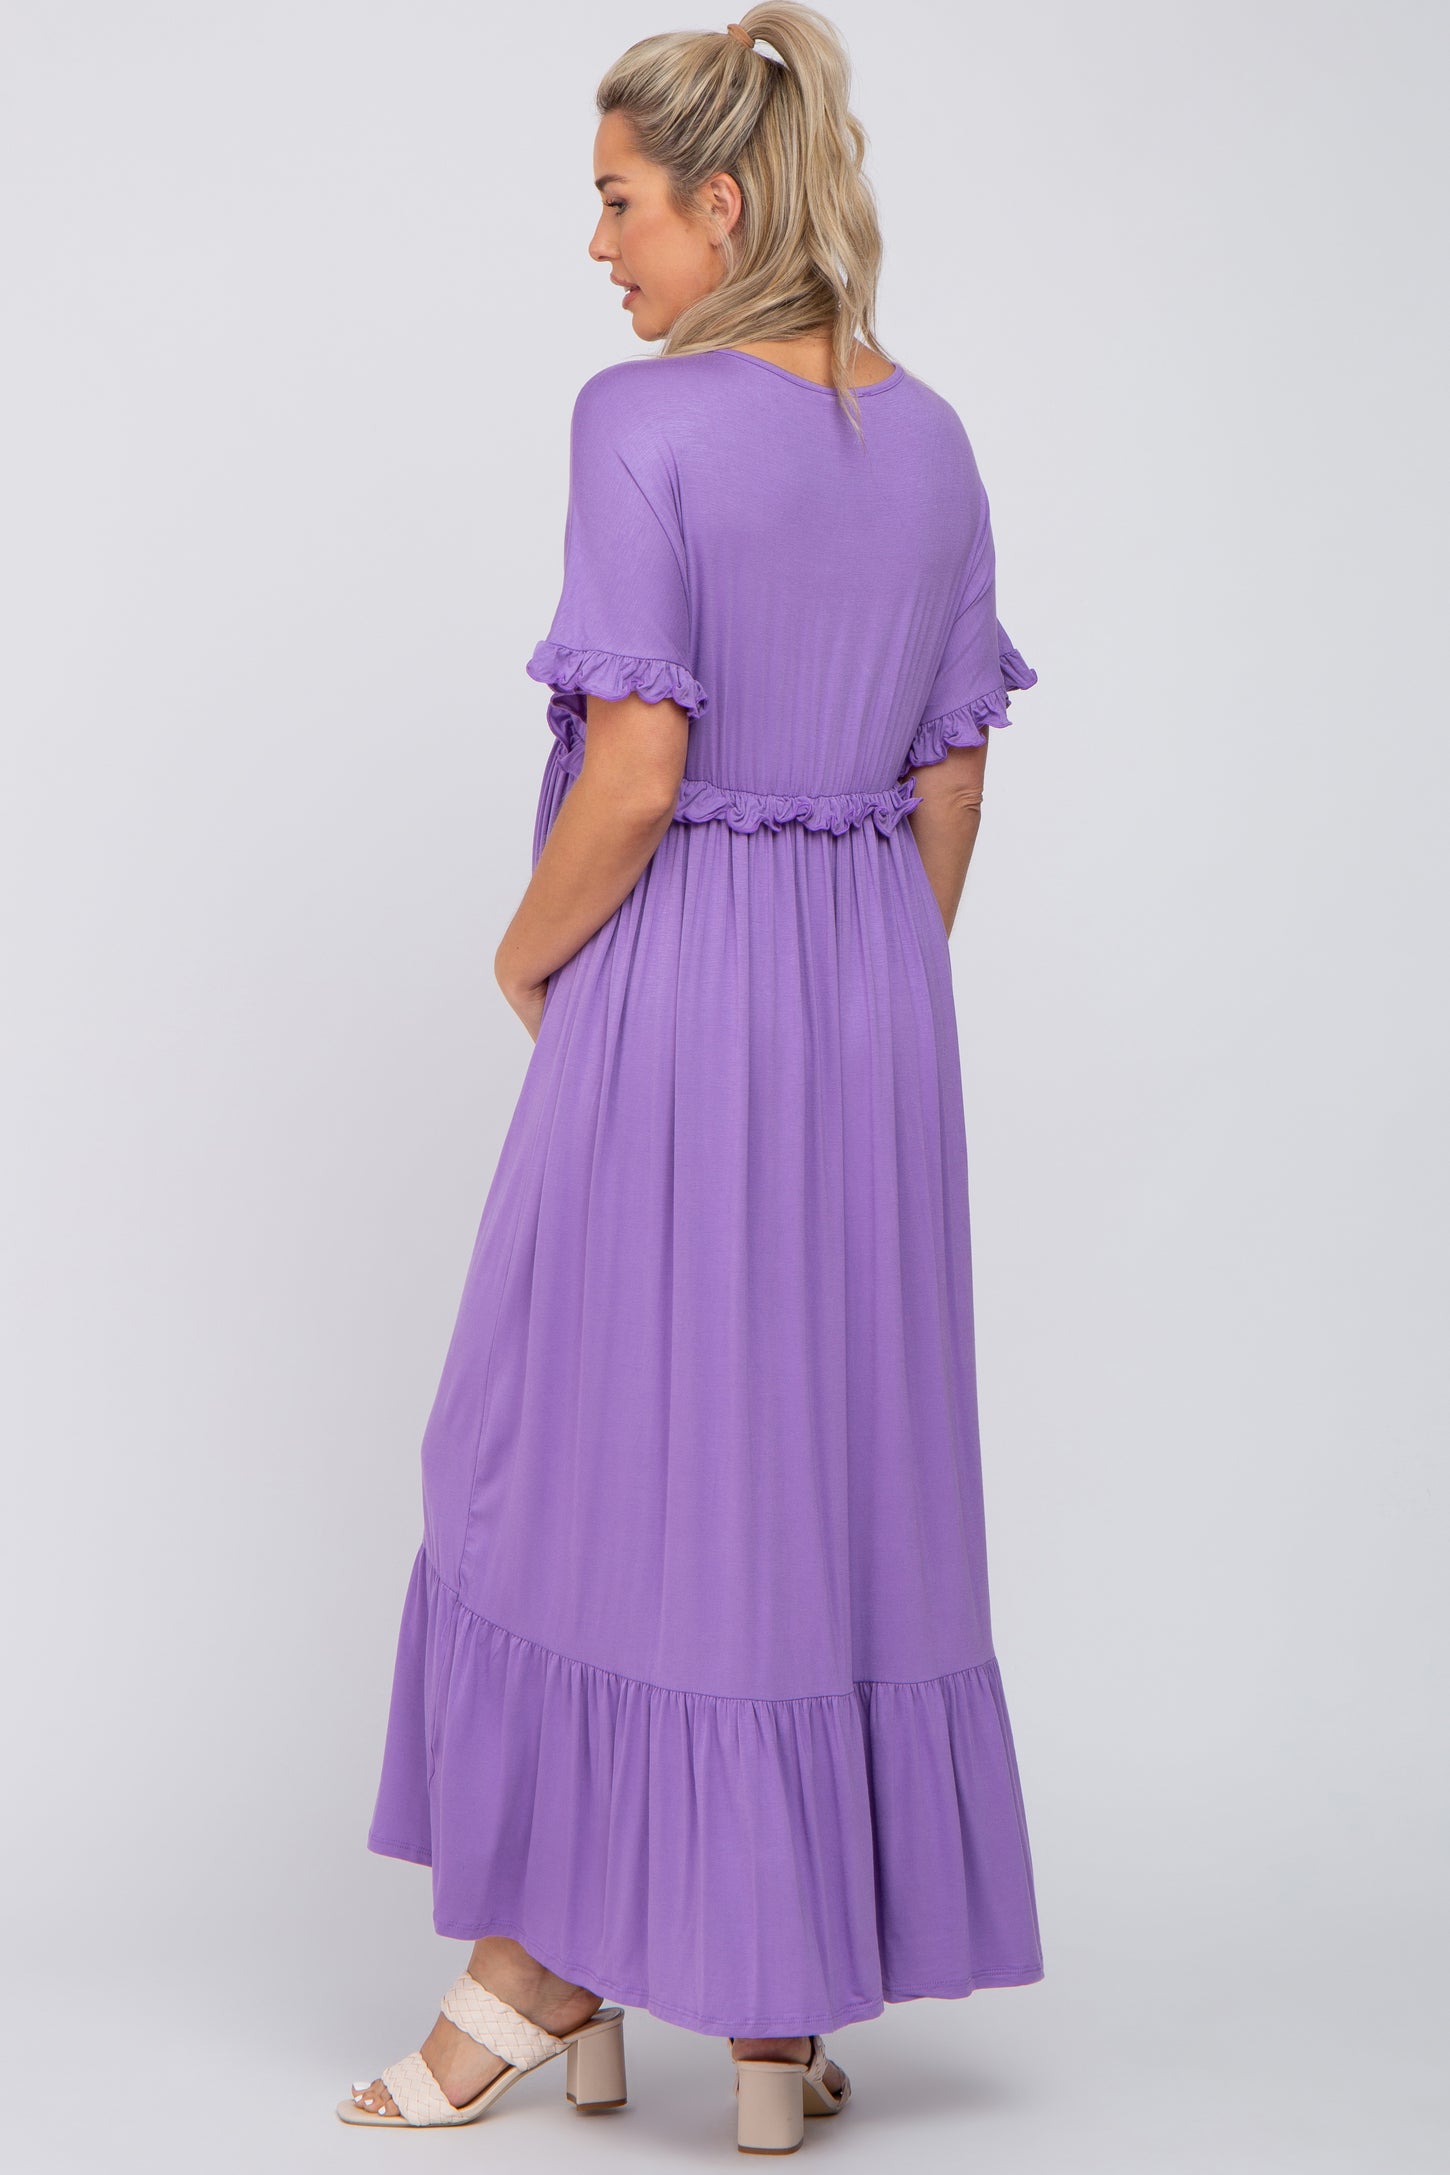 Lavender Solid Ruffle Maternity Maxi Dress